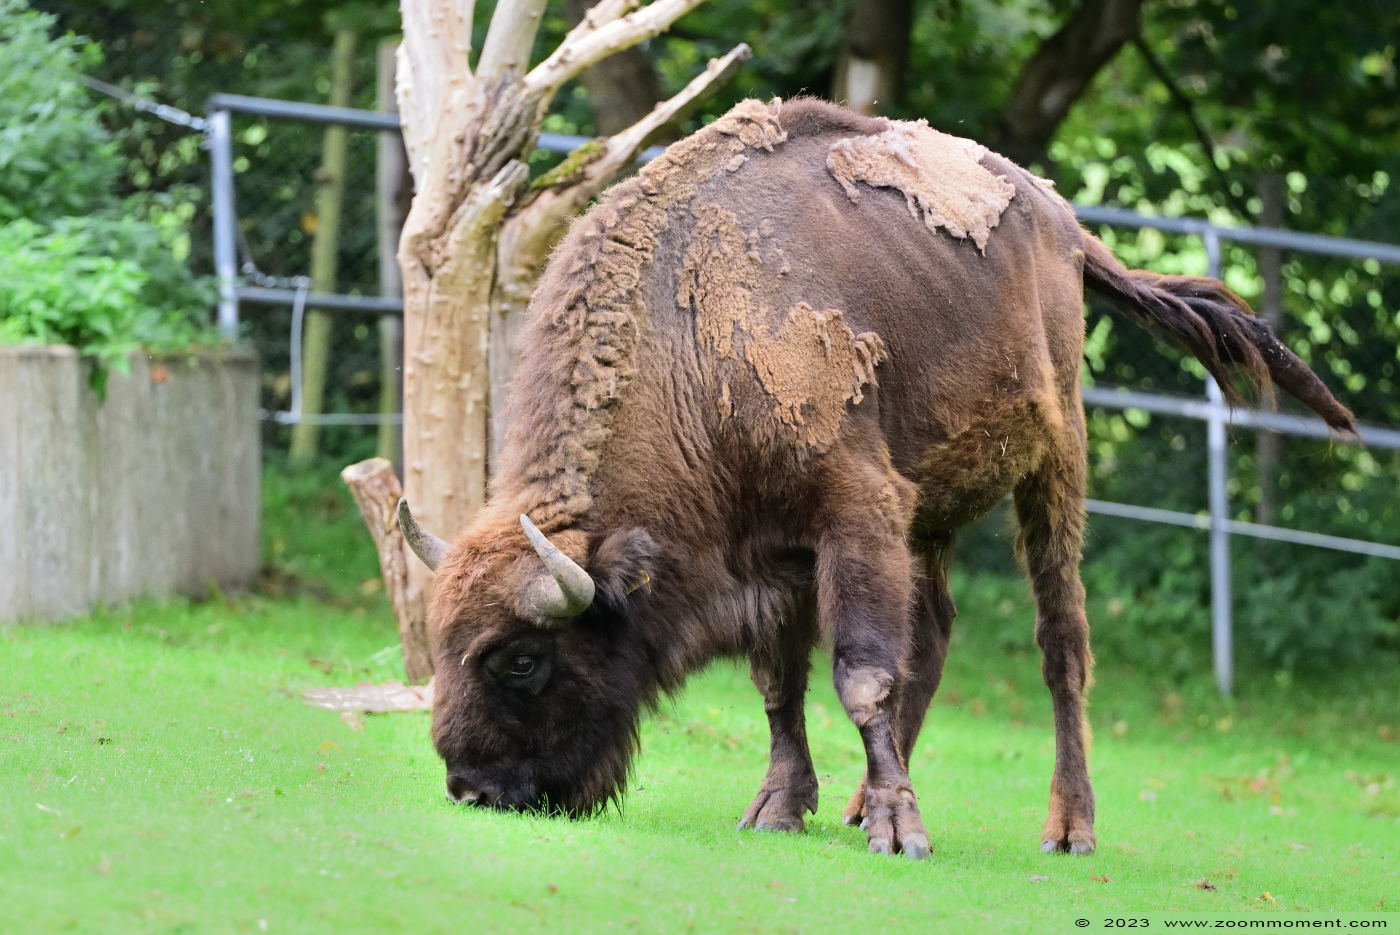 Wisent ( Bison bonasus or Bos bonasus ) European bison
Trefwoorden: Neuwied Germany Wisent Bison bonasus Bos bonasus European bison